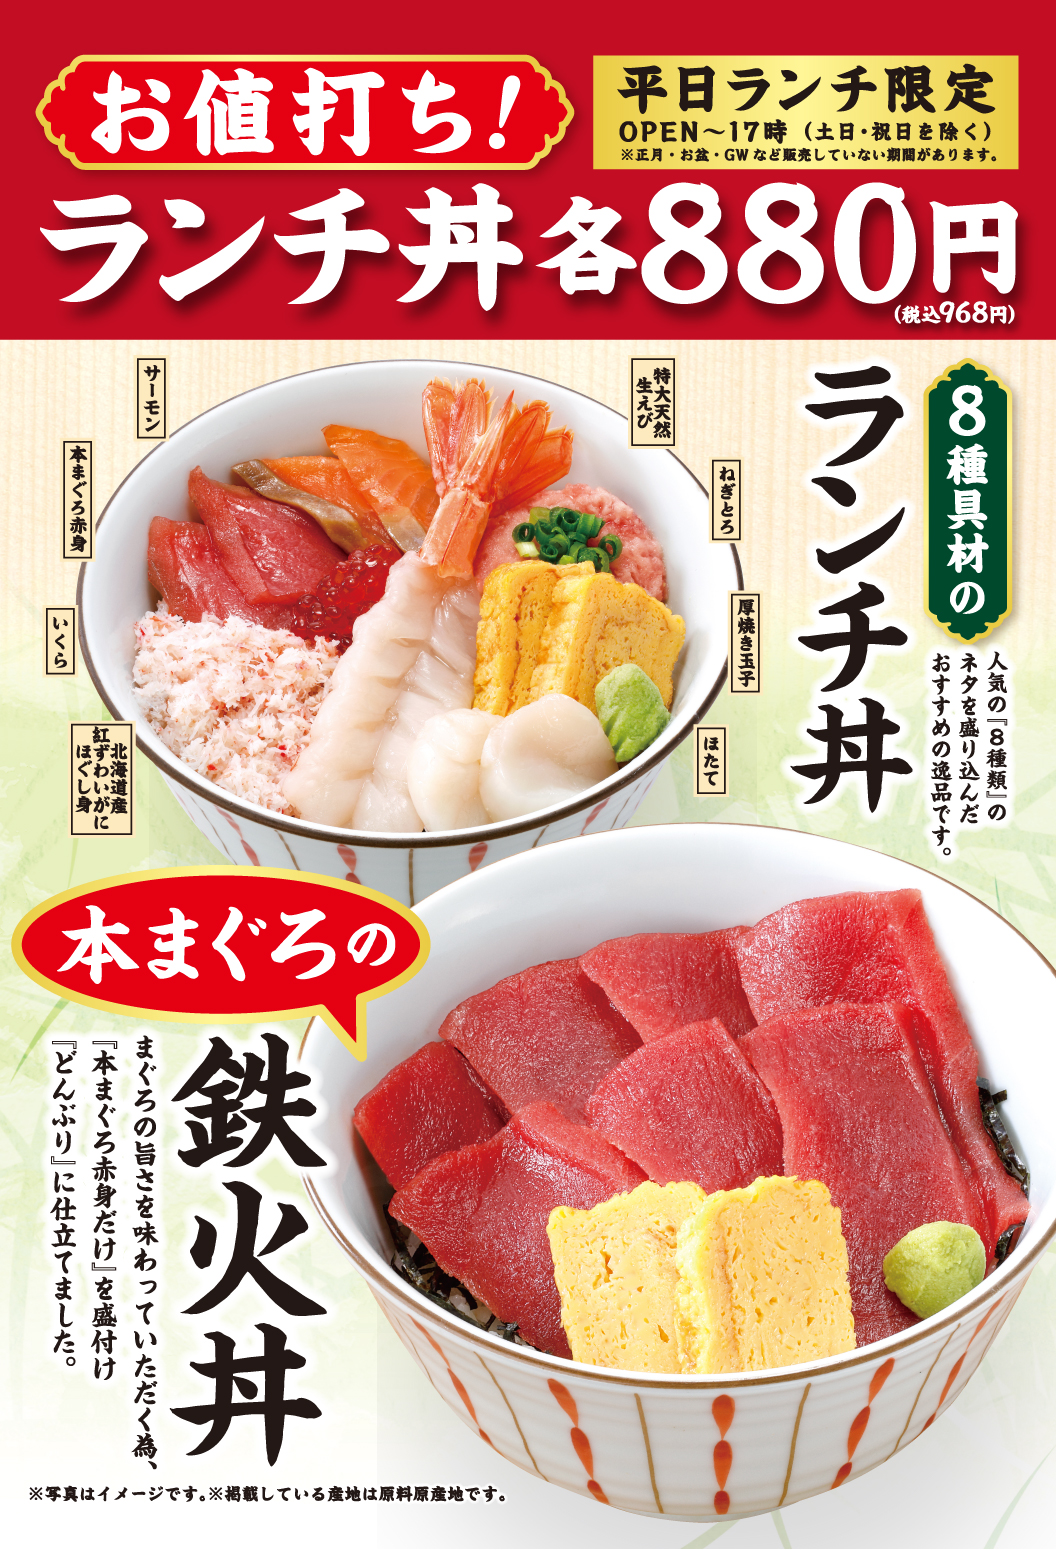 Value for money! Lunch bowl 880 yen each (968 yen including tax)